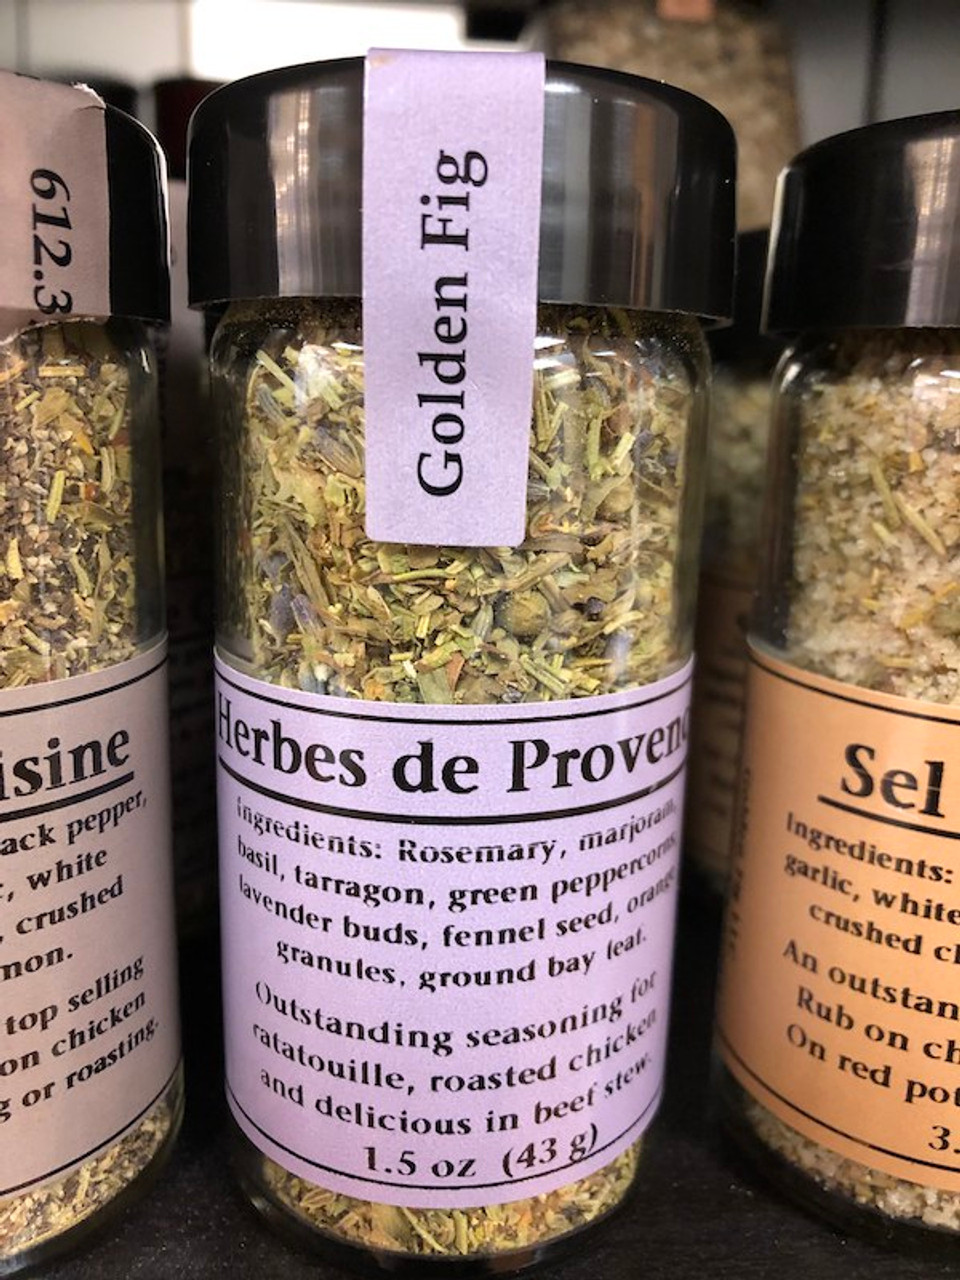 Herbes de Provence - salt free